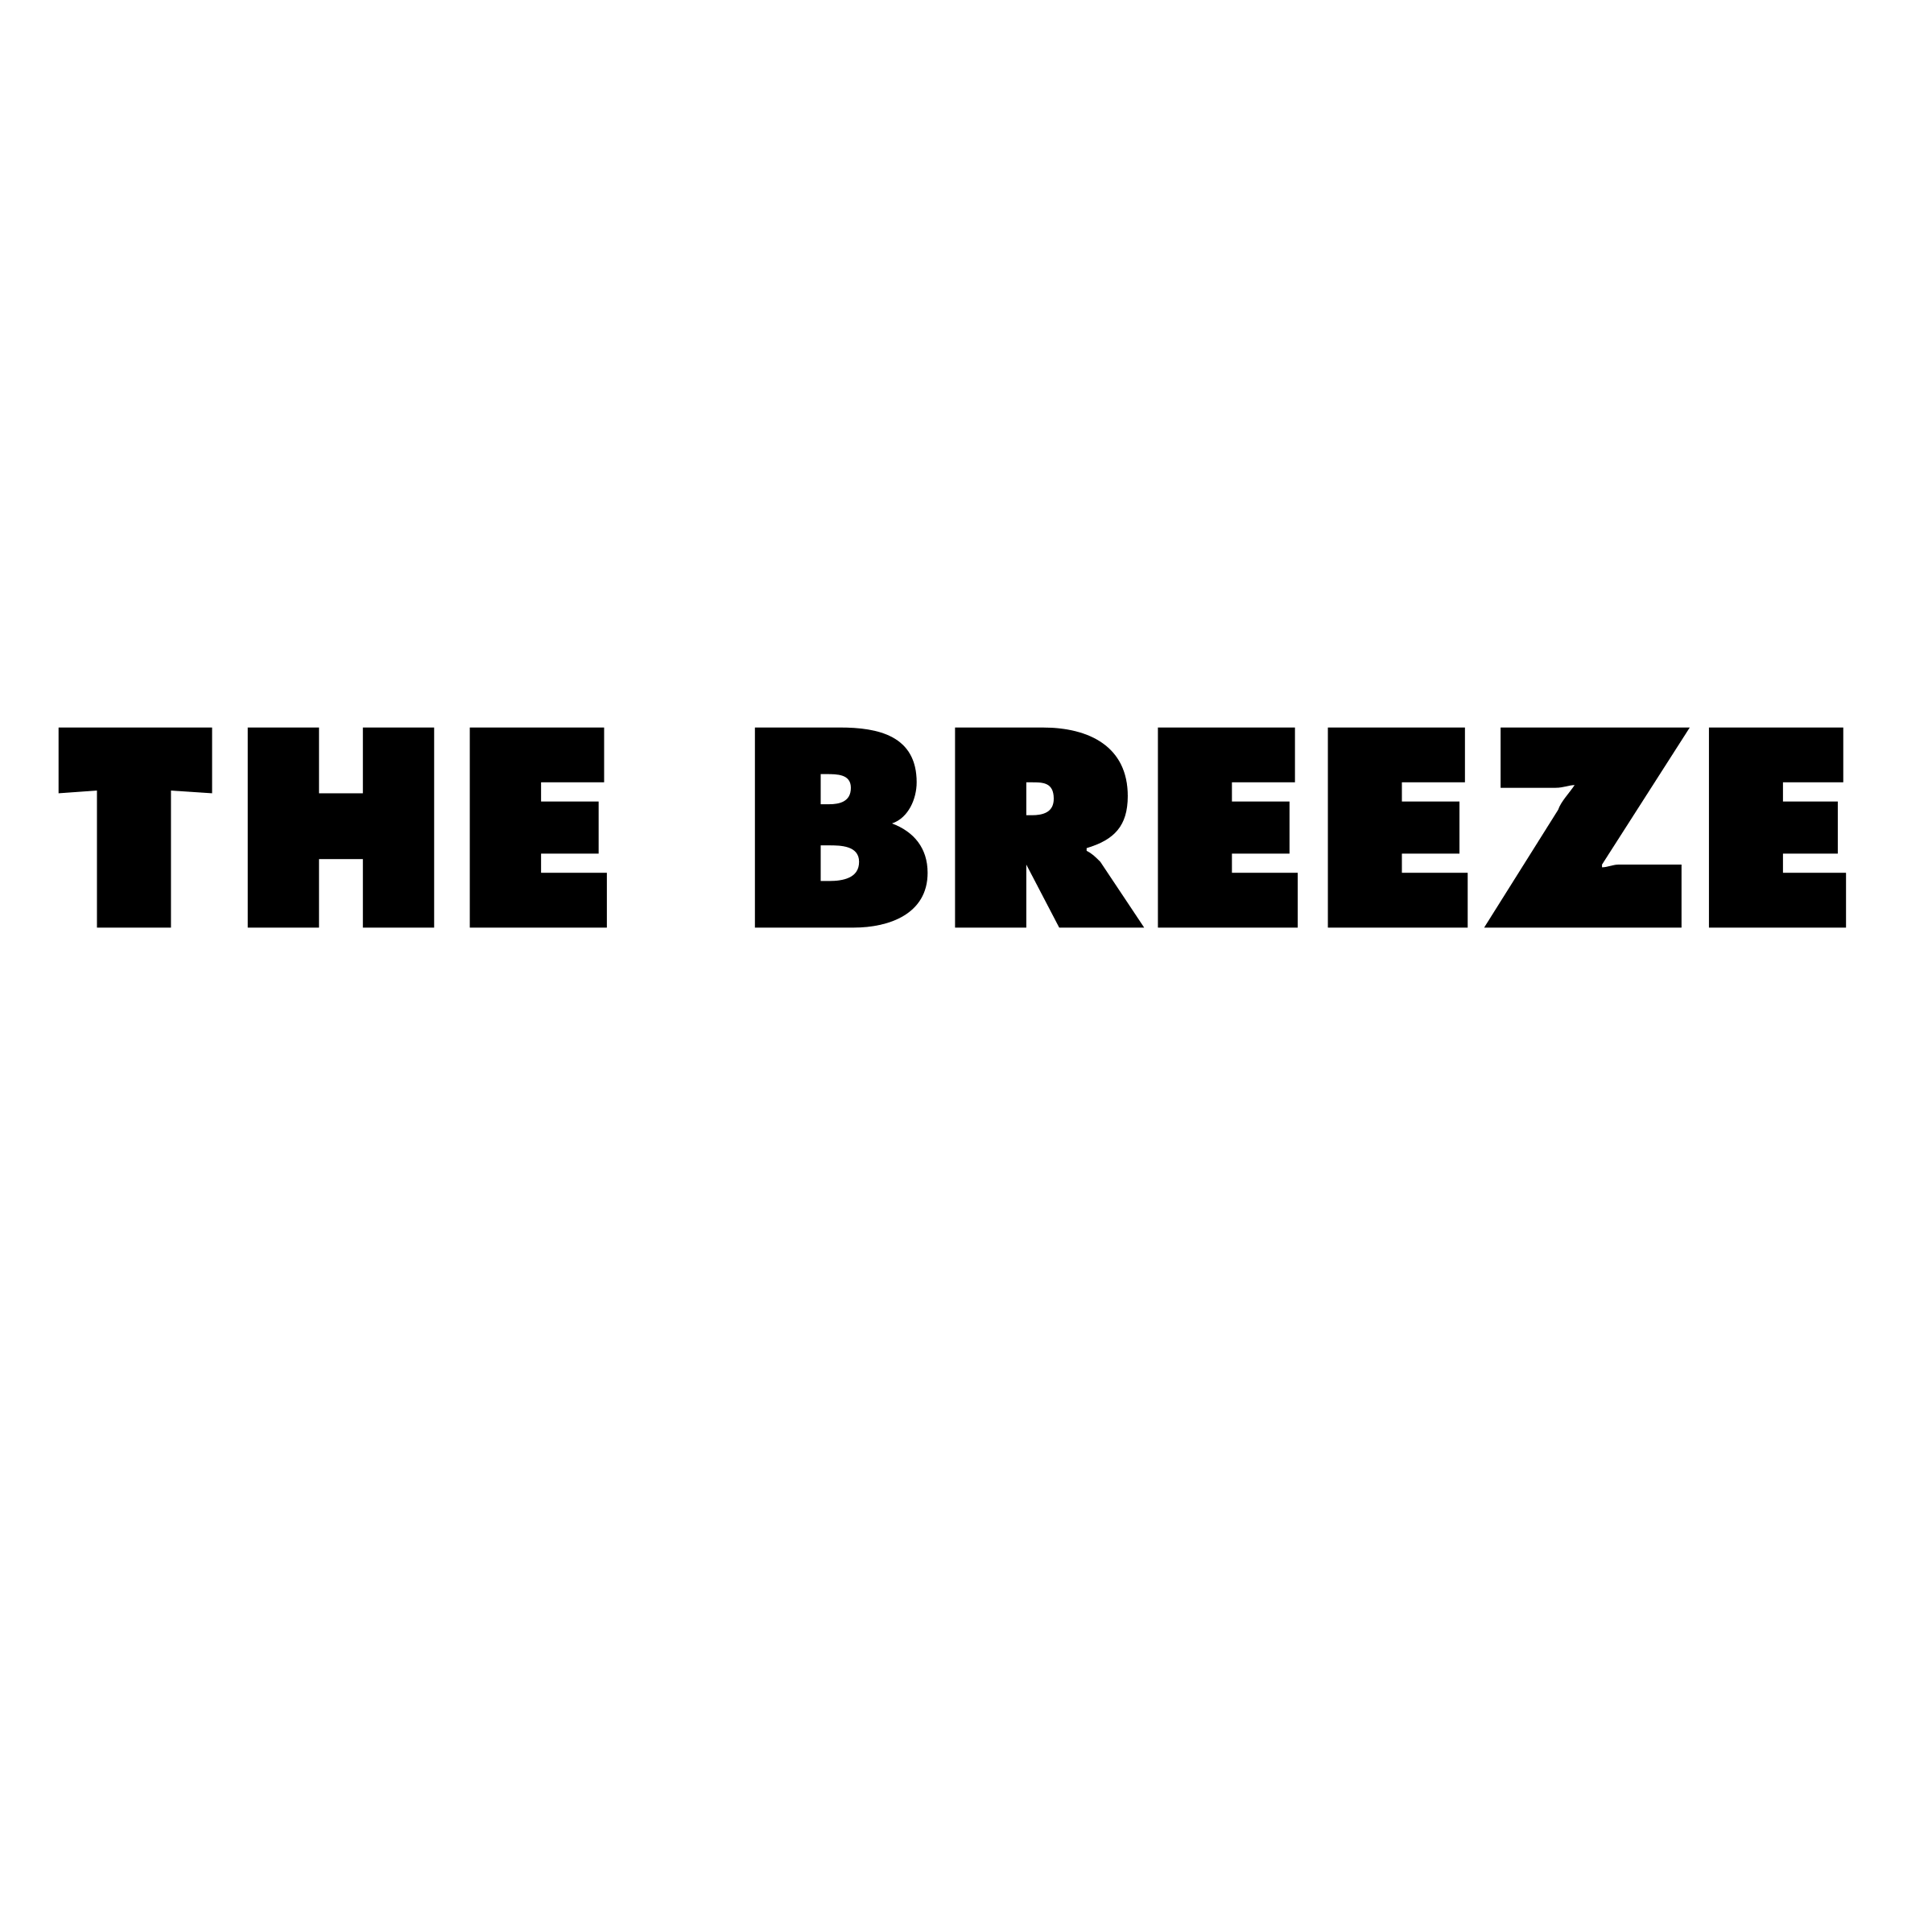 Black Breeze Logo - The Breeze Logo PNG Transparent & SVG Vector - Freebie Supply